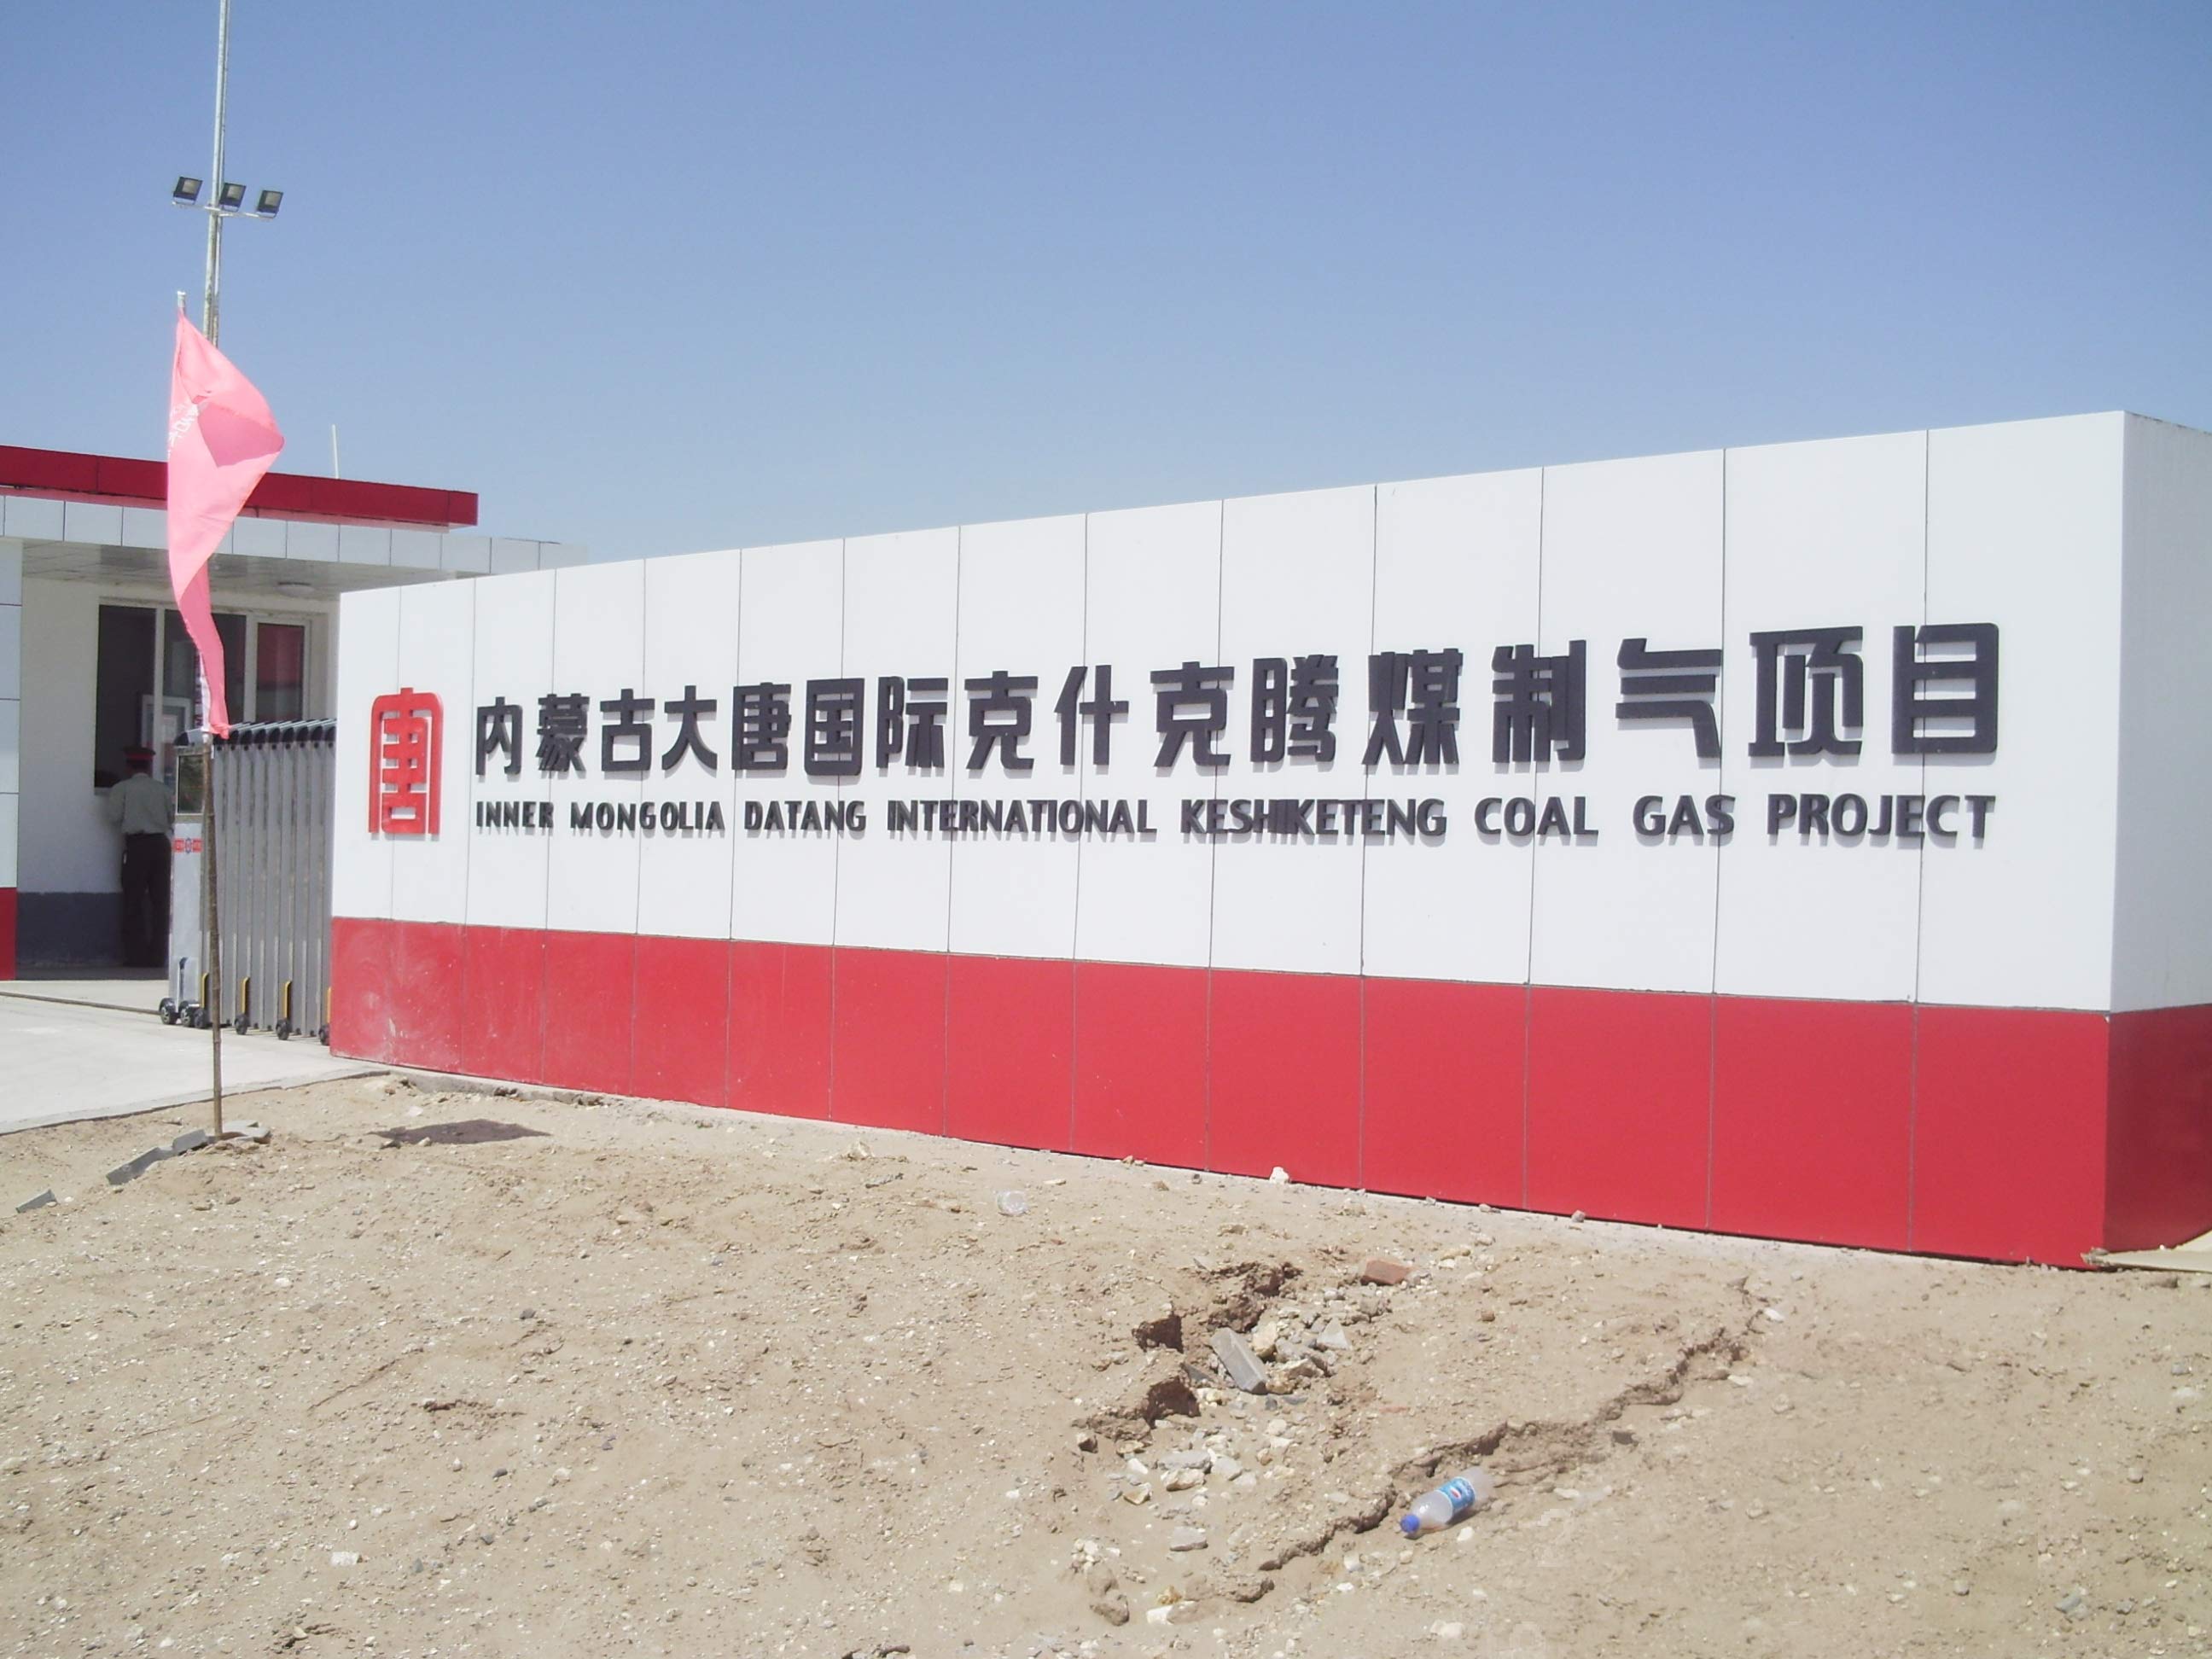 Inner Mongolia Datang International Keshiketeng Coal Gas Project, China